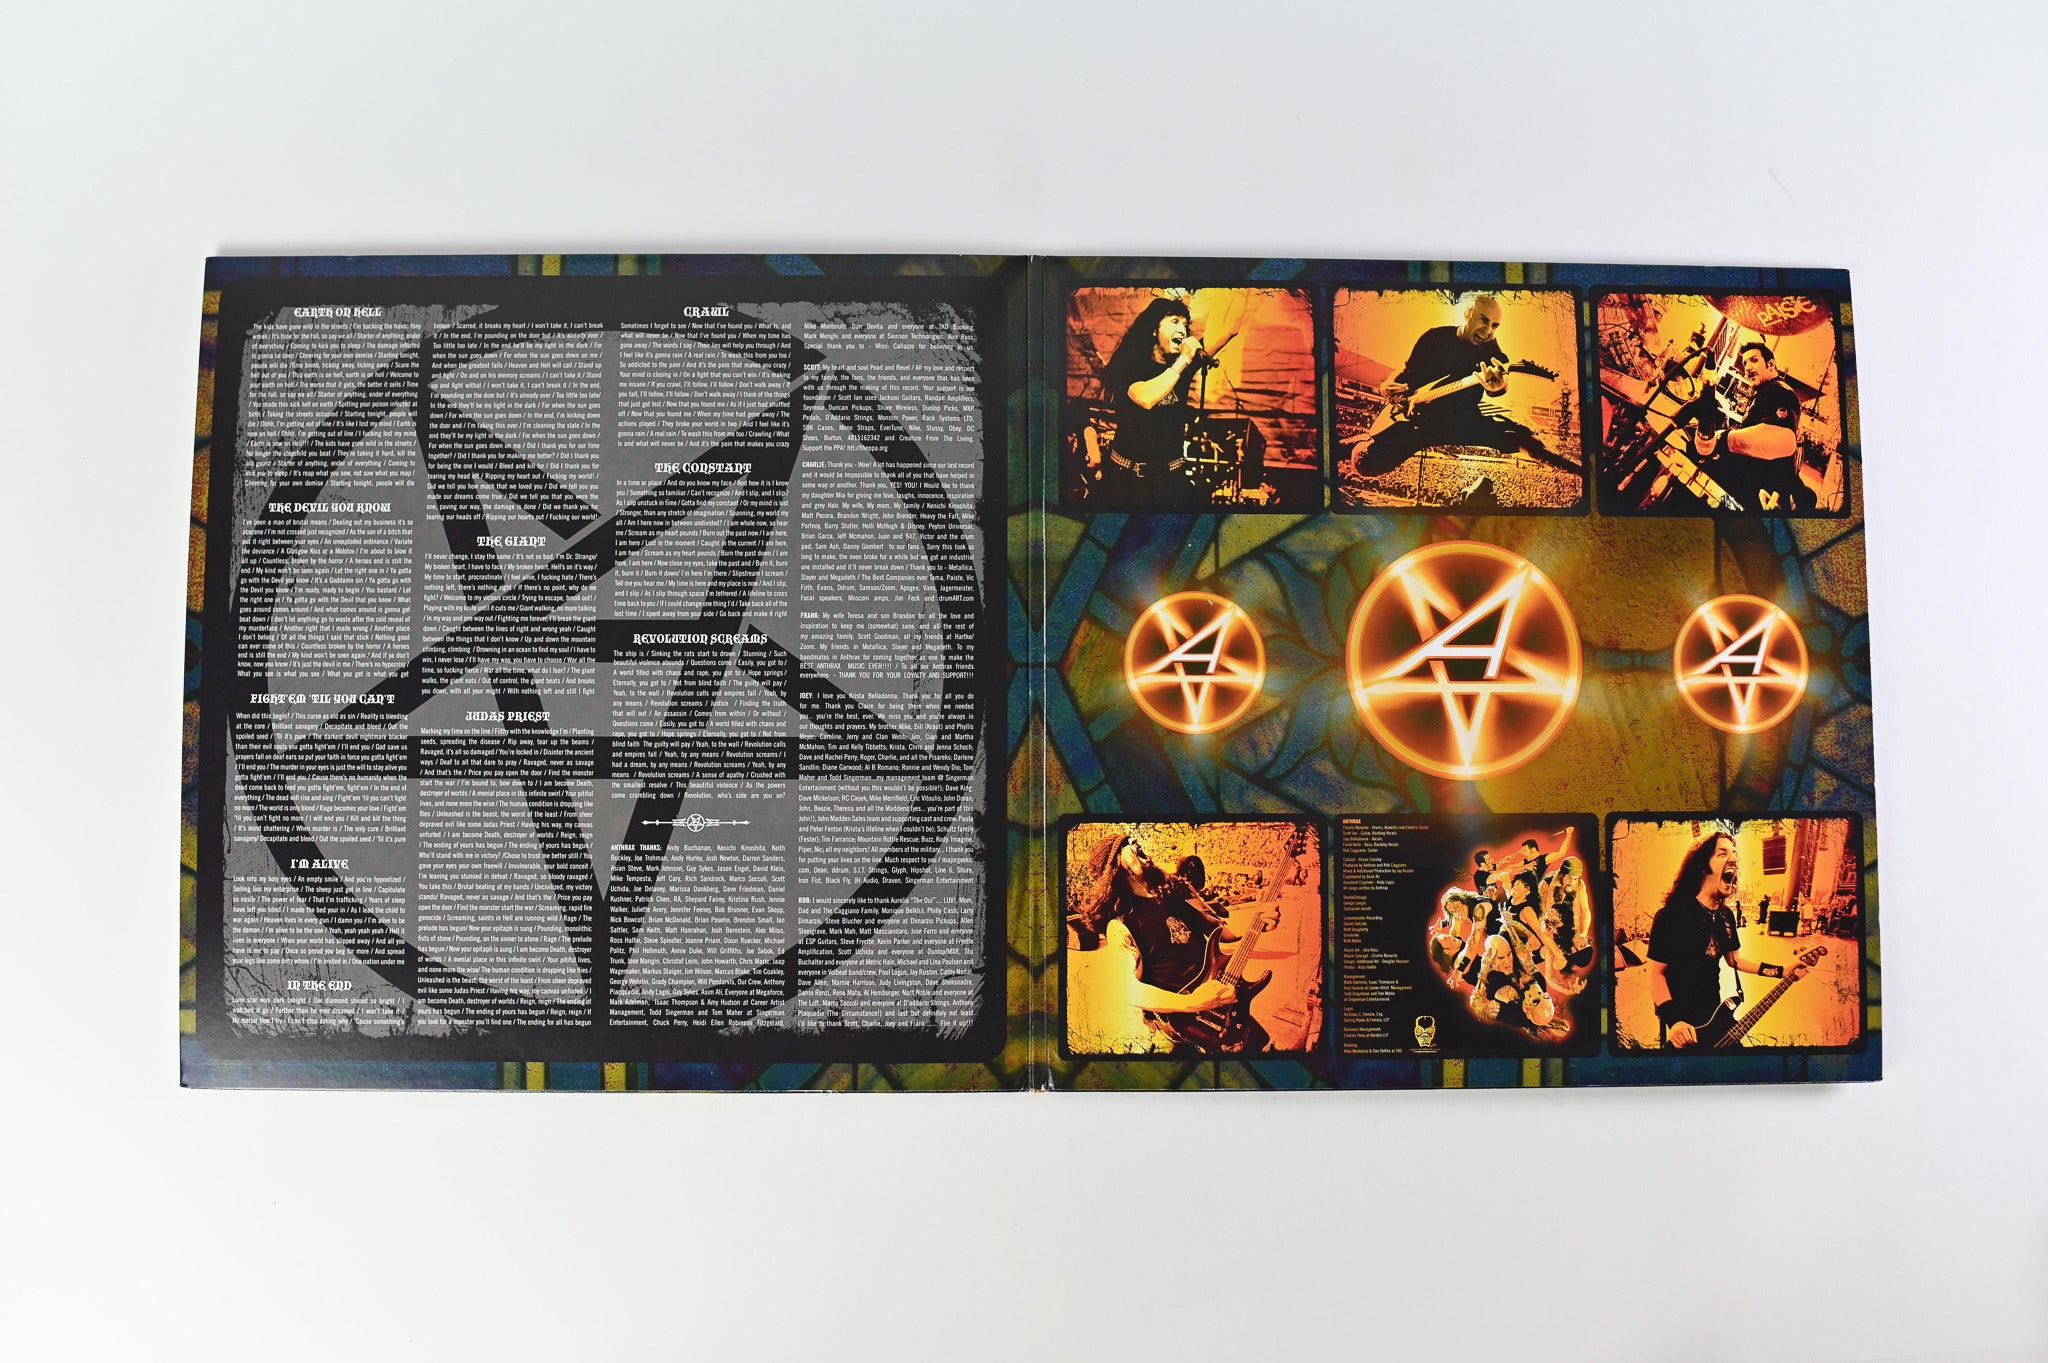 Anthrax - Worship Music on Nuclear Blast Reissue